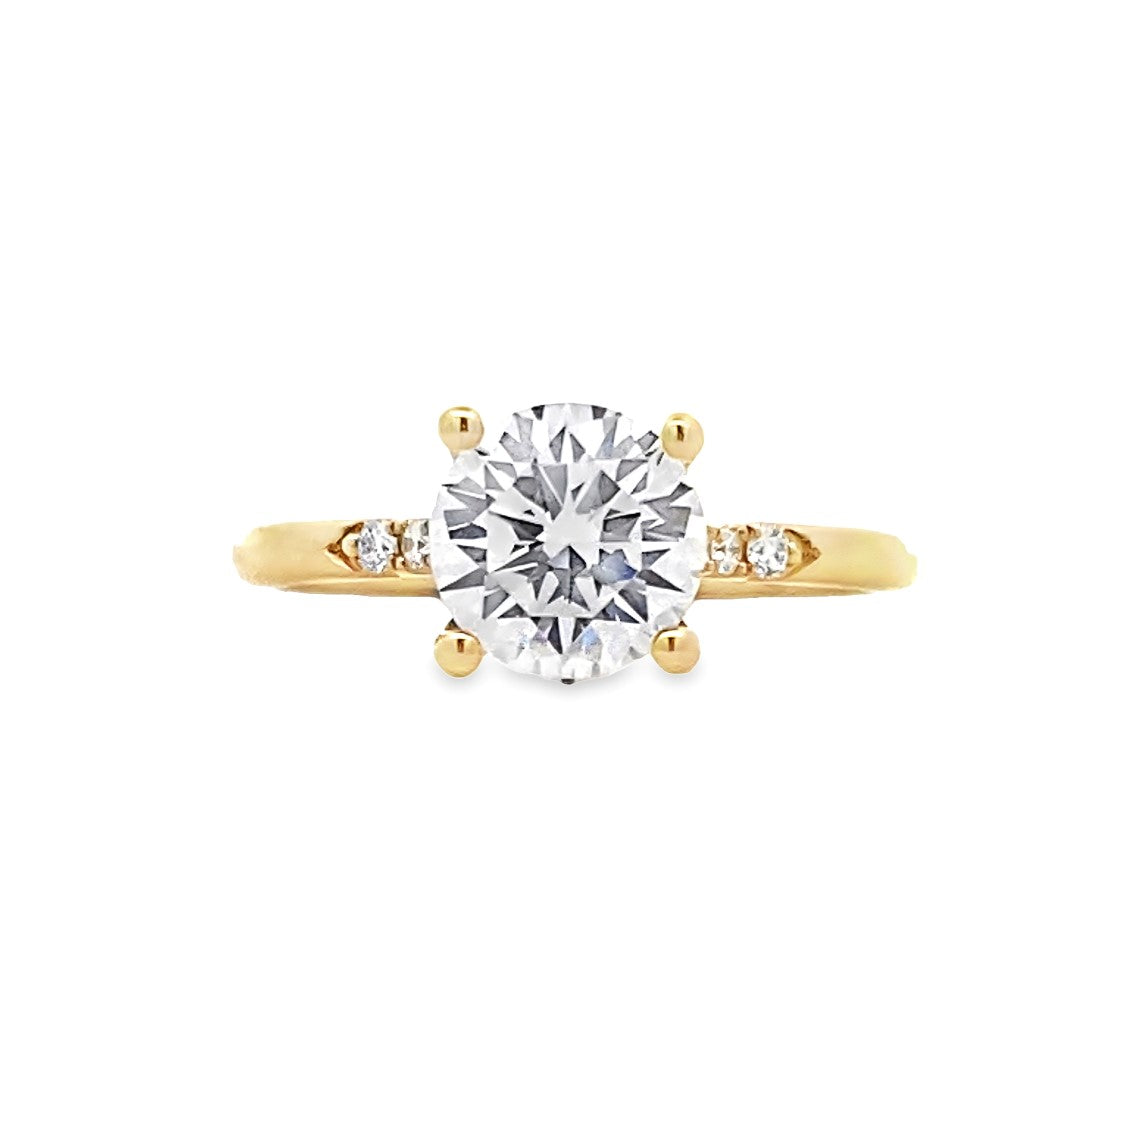 FANA 14KT Yellow Gold Diamond Engagement Ring S4181/YG 1.5CT